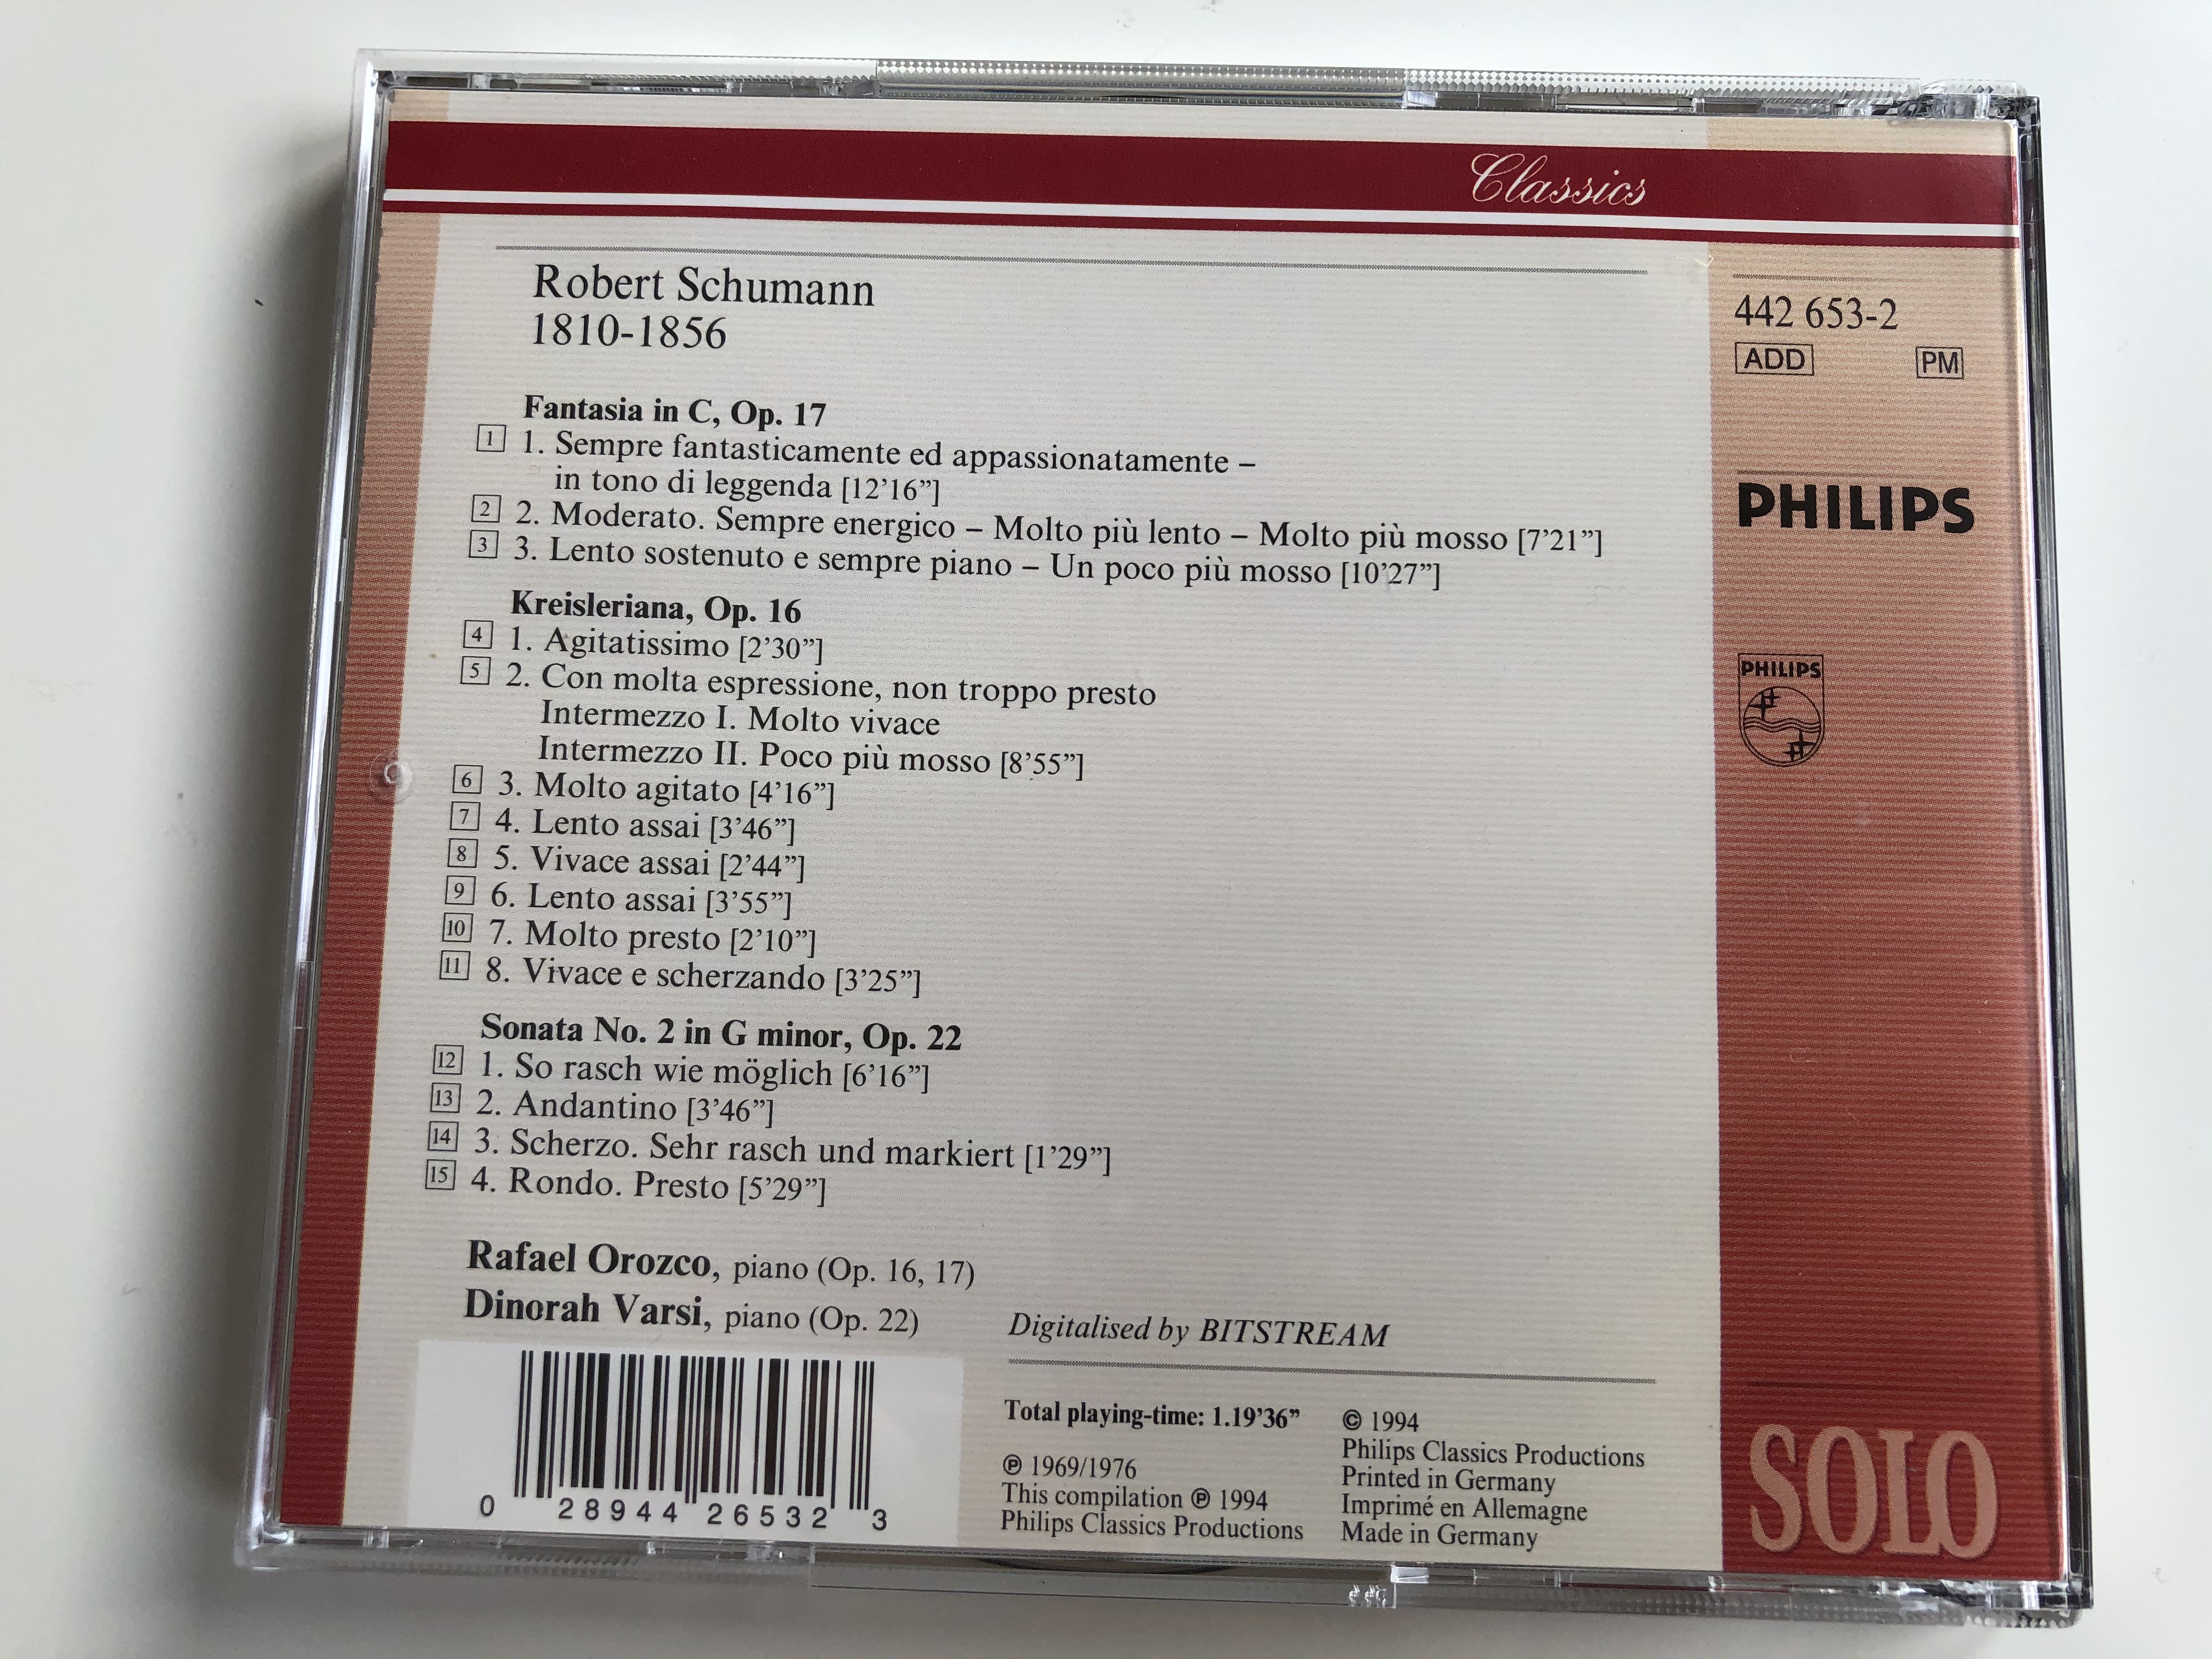 schumann-fantasy-in-c-kreisleriana-sonata-no.-2-in-g-minor-rafael-orozco-dinorah-varsi-philips-audio-cd-1994-442-653-2-7-.jpg